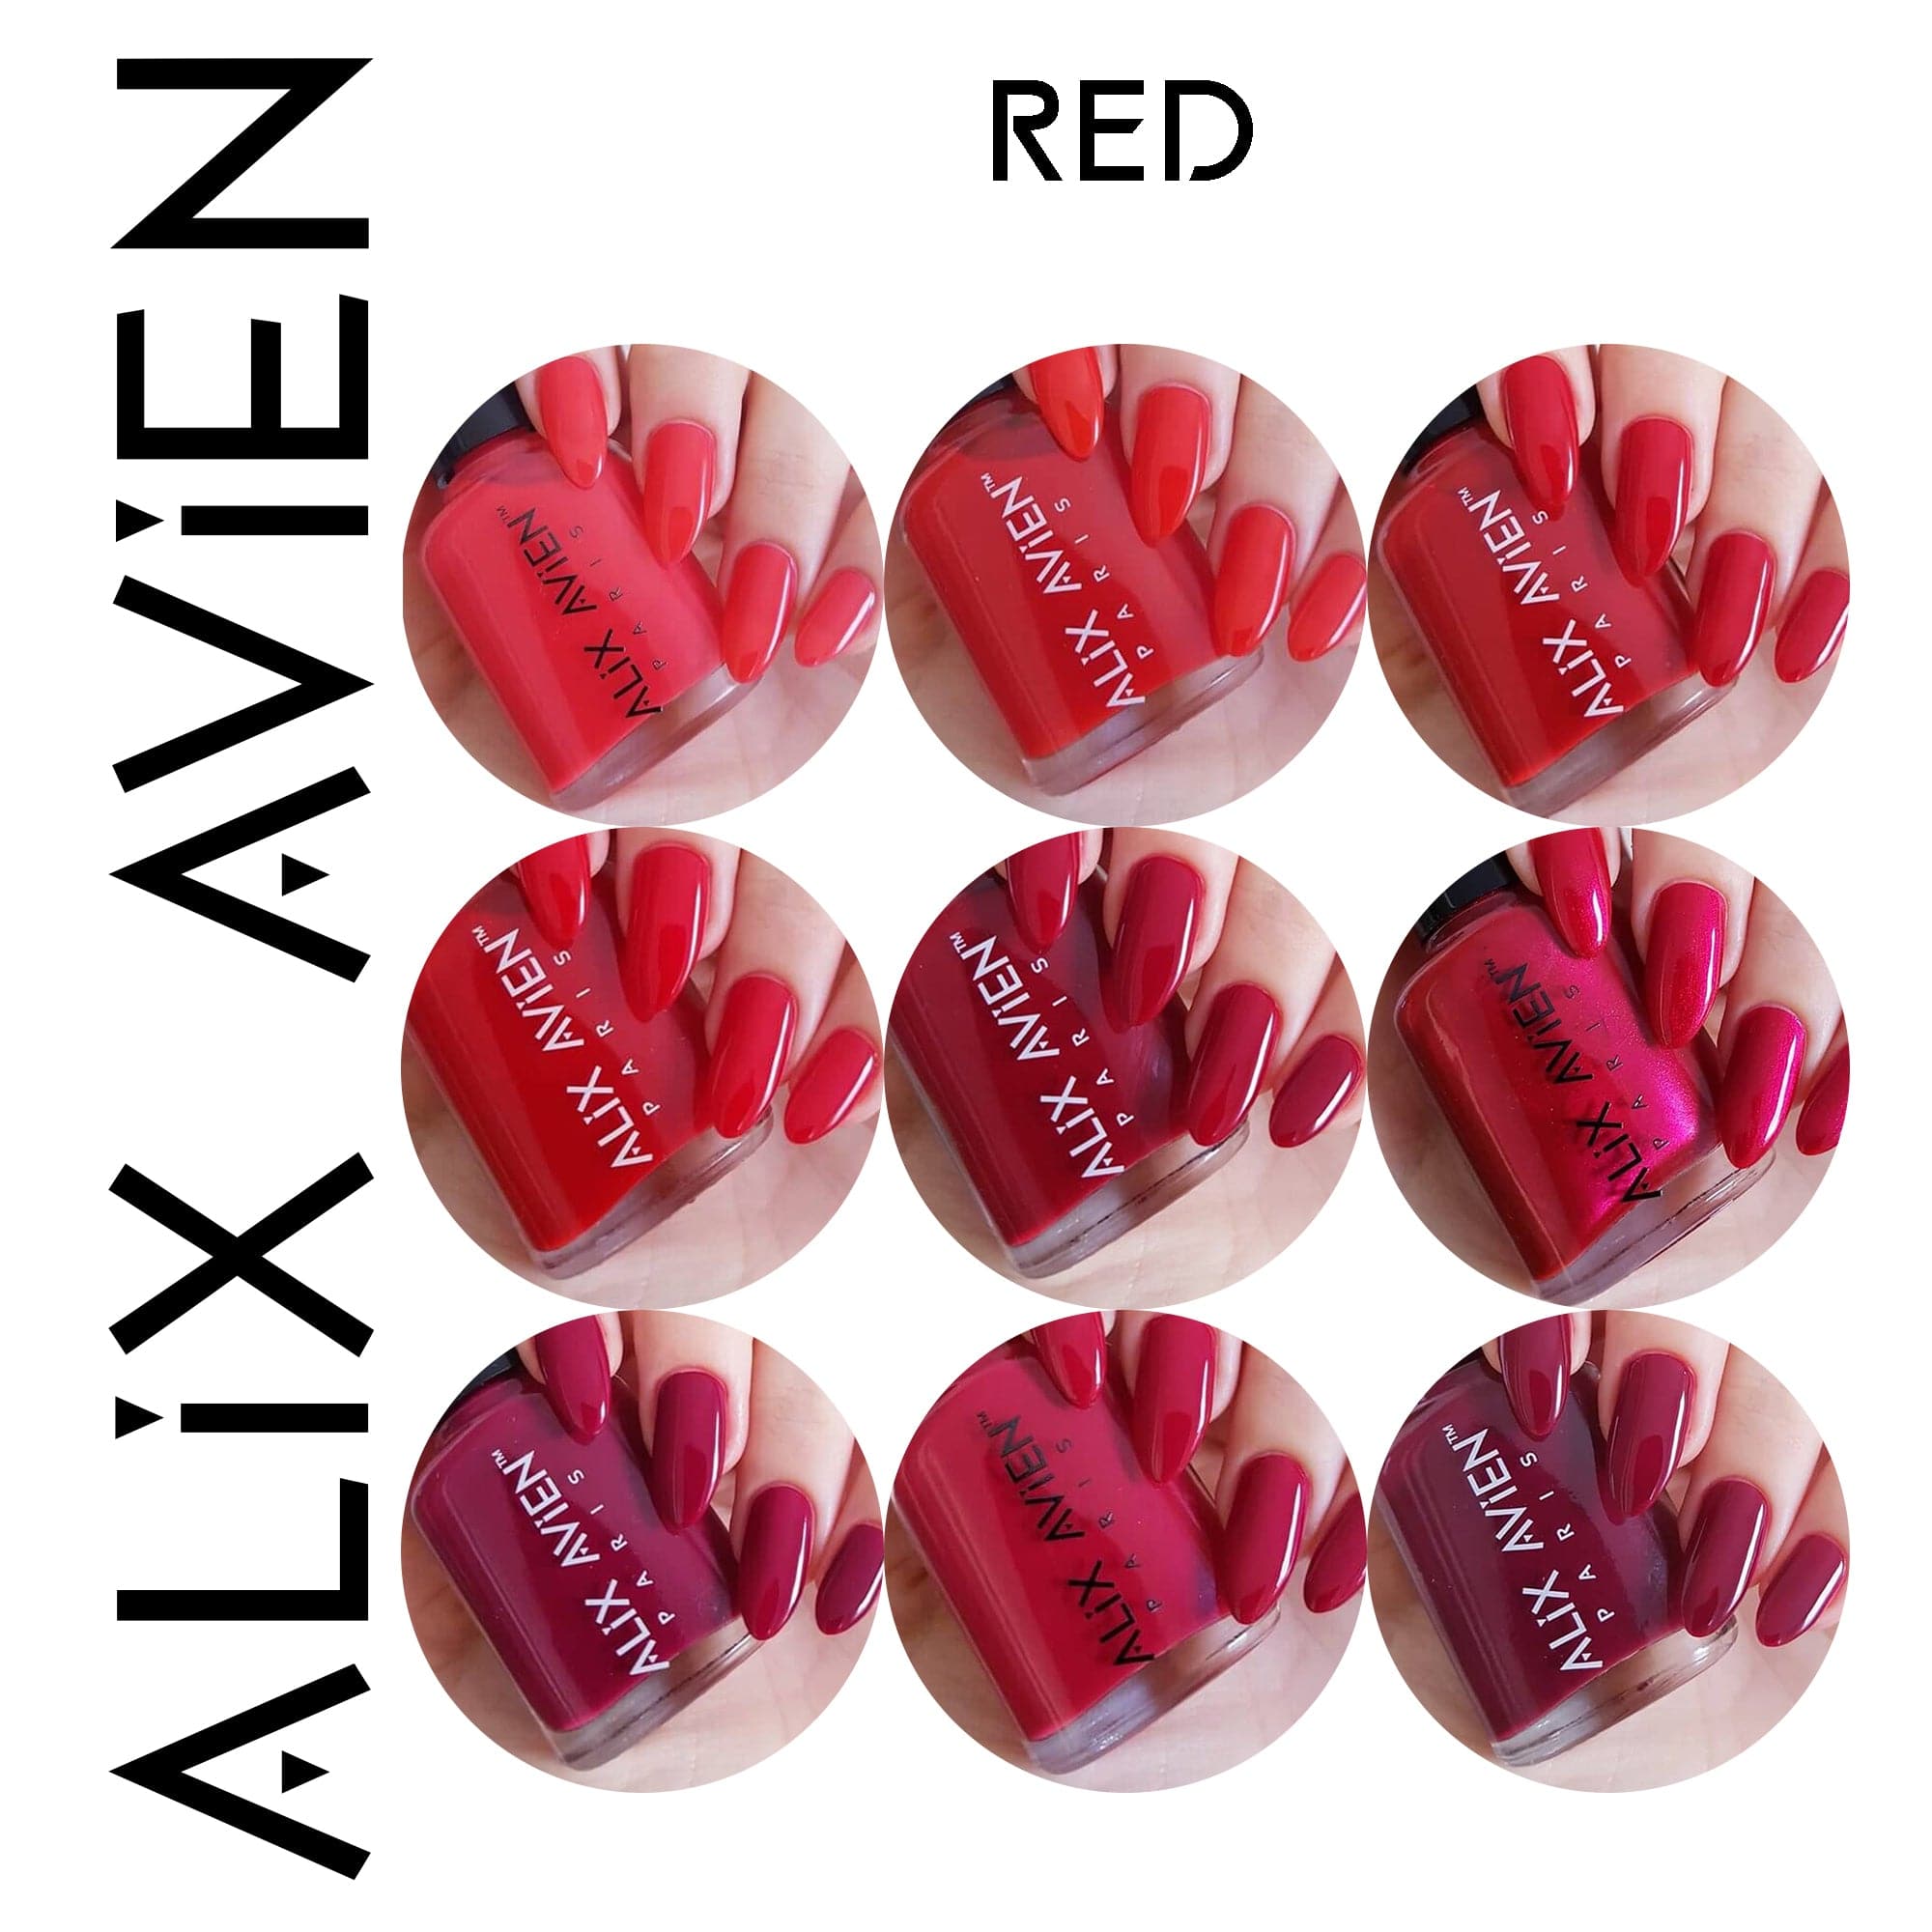 Alix Avien - Nail Polish No.57 (Red Liquorice) - Eson Direct